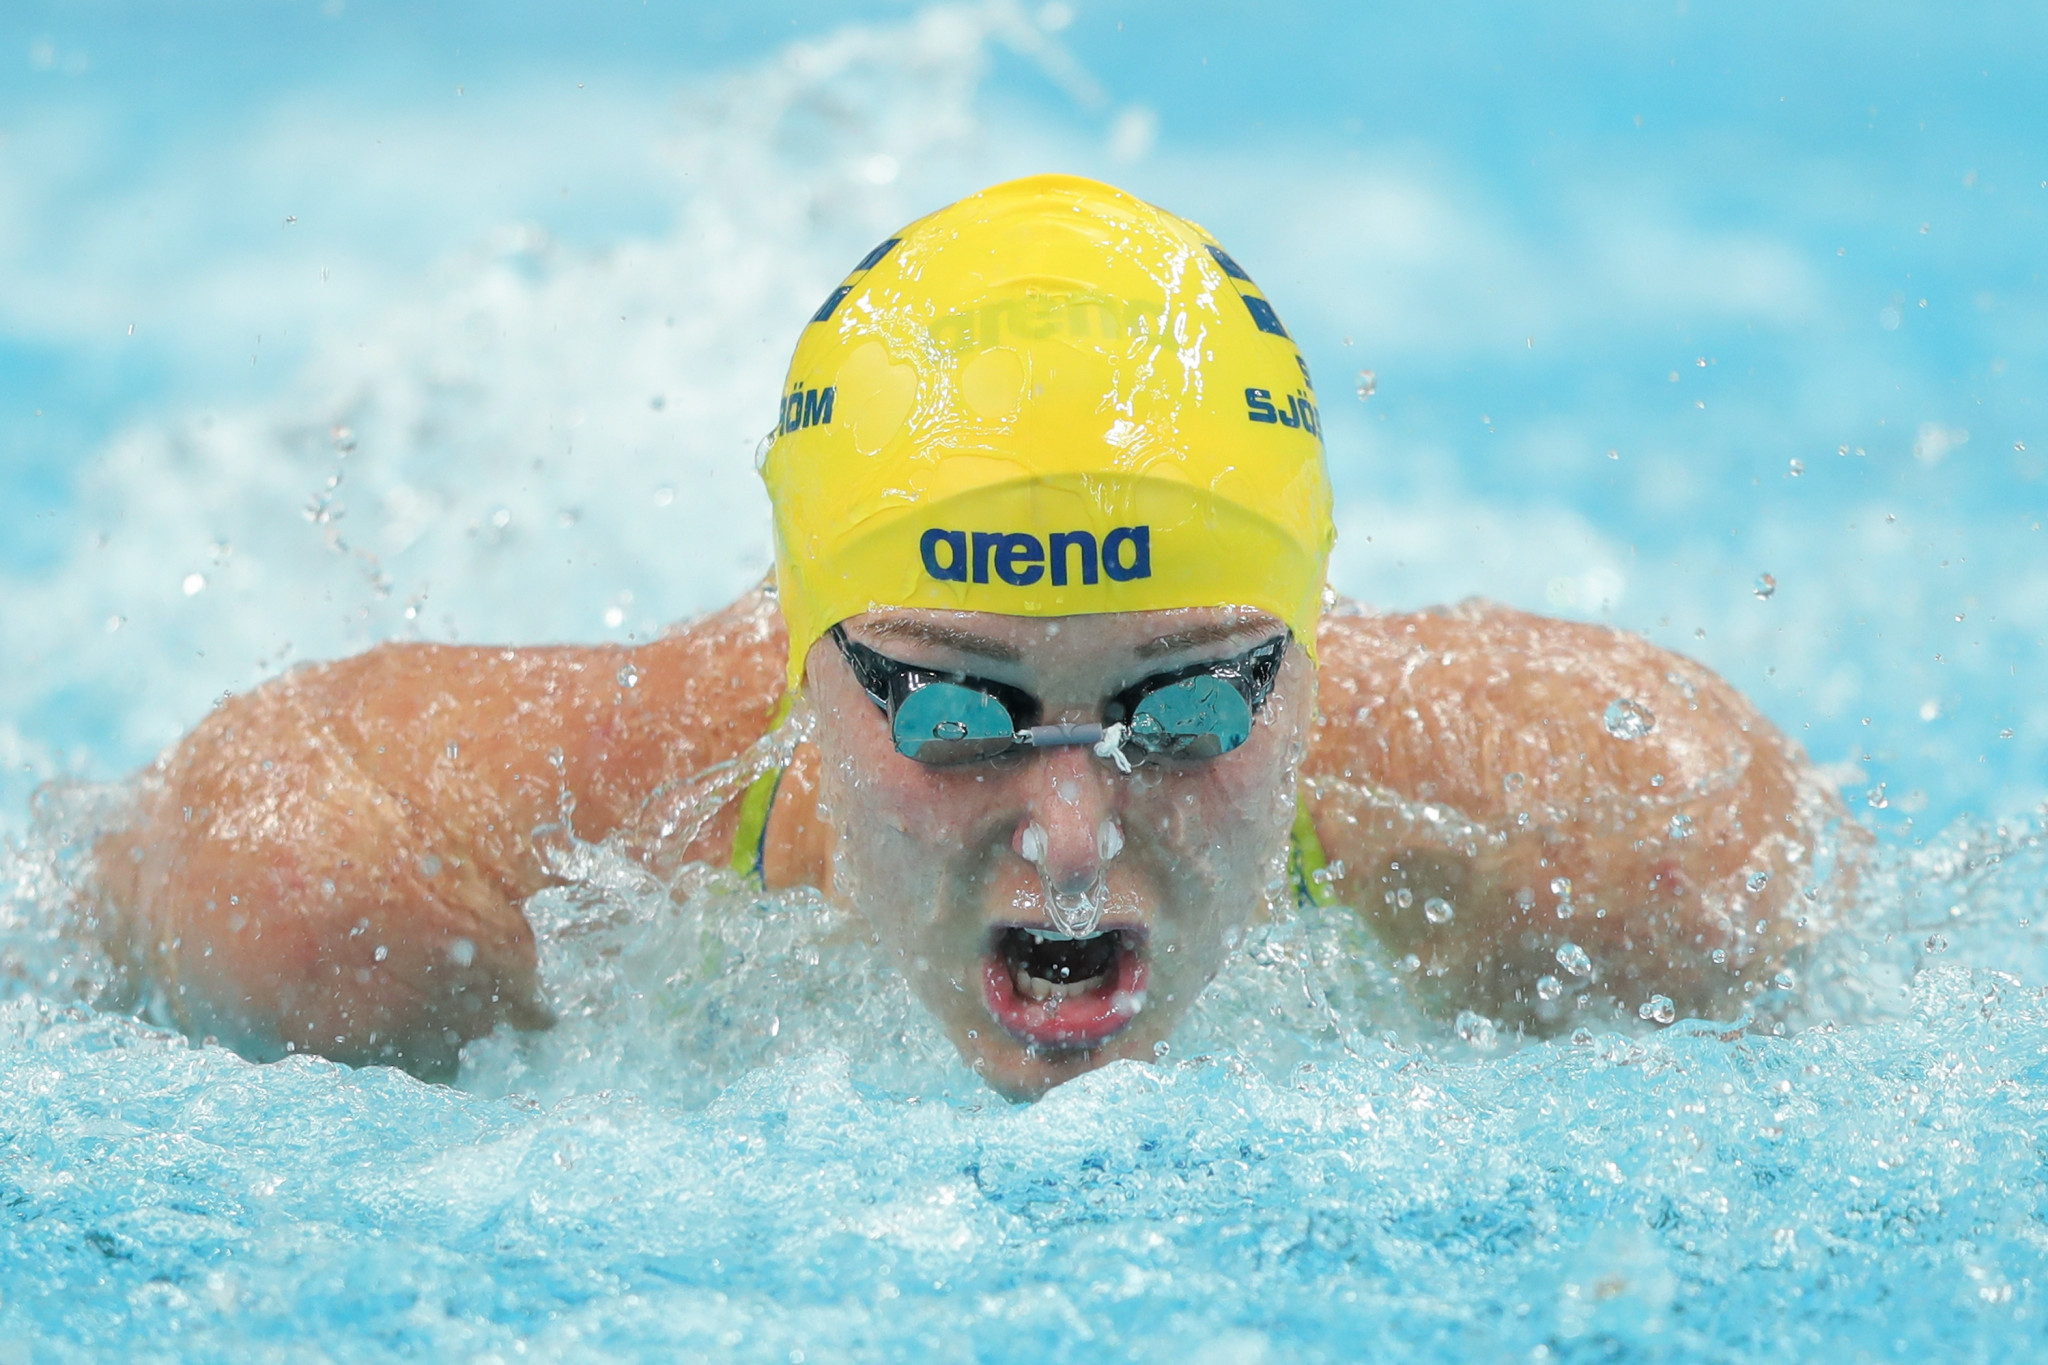 Sjöström ends Hosszú's 28-win streak at 100m individual medley at season's final Swimming World Cup 